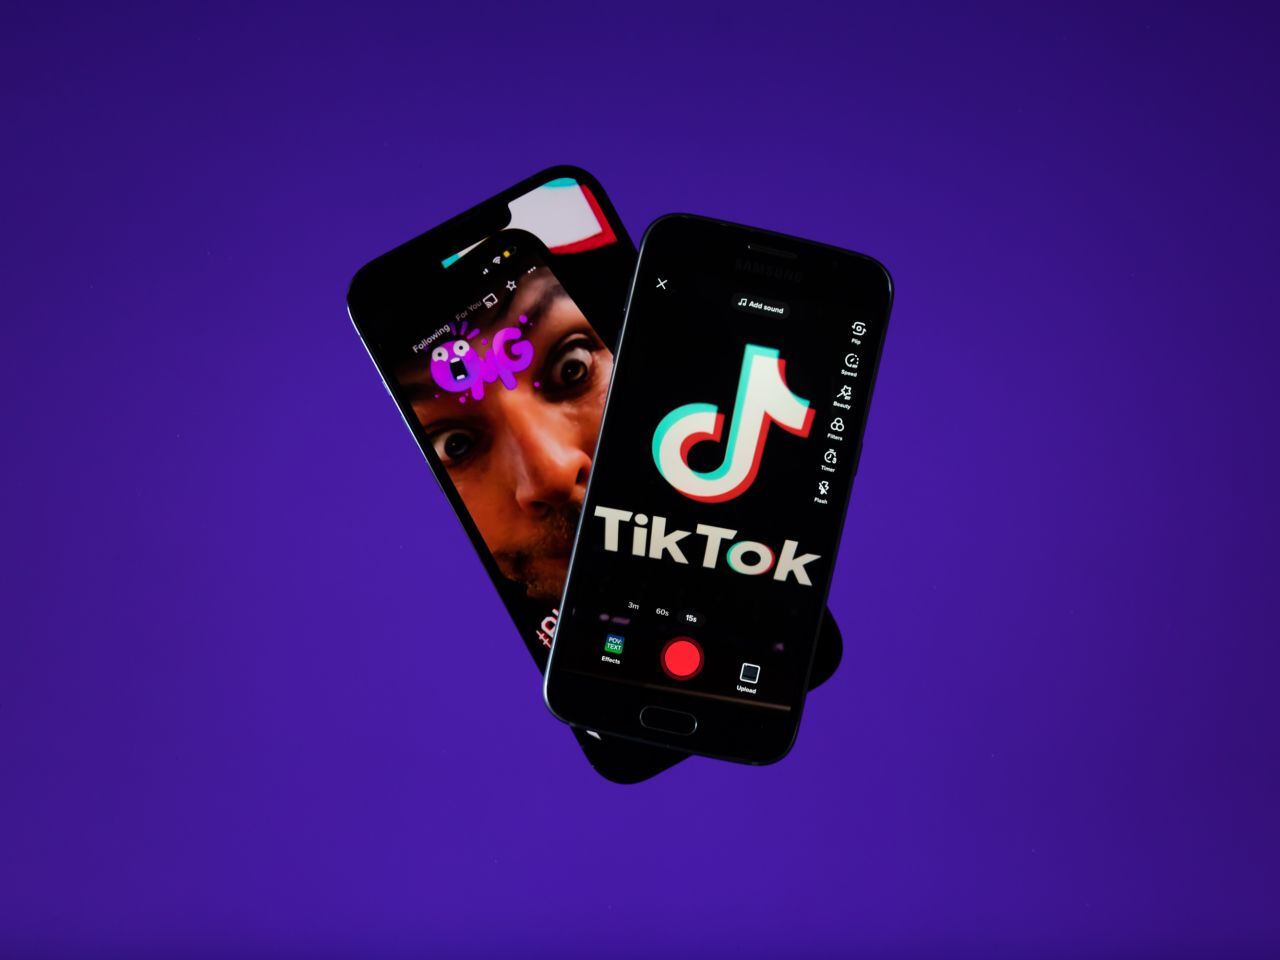 「TikTok」、第1四半期アプリダウンロード数で1位--累計35億件を突破 - CNET Japan